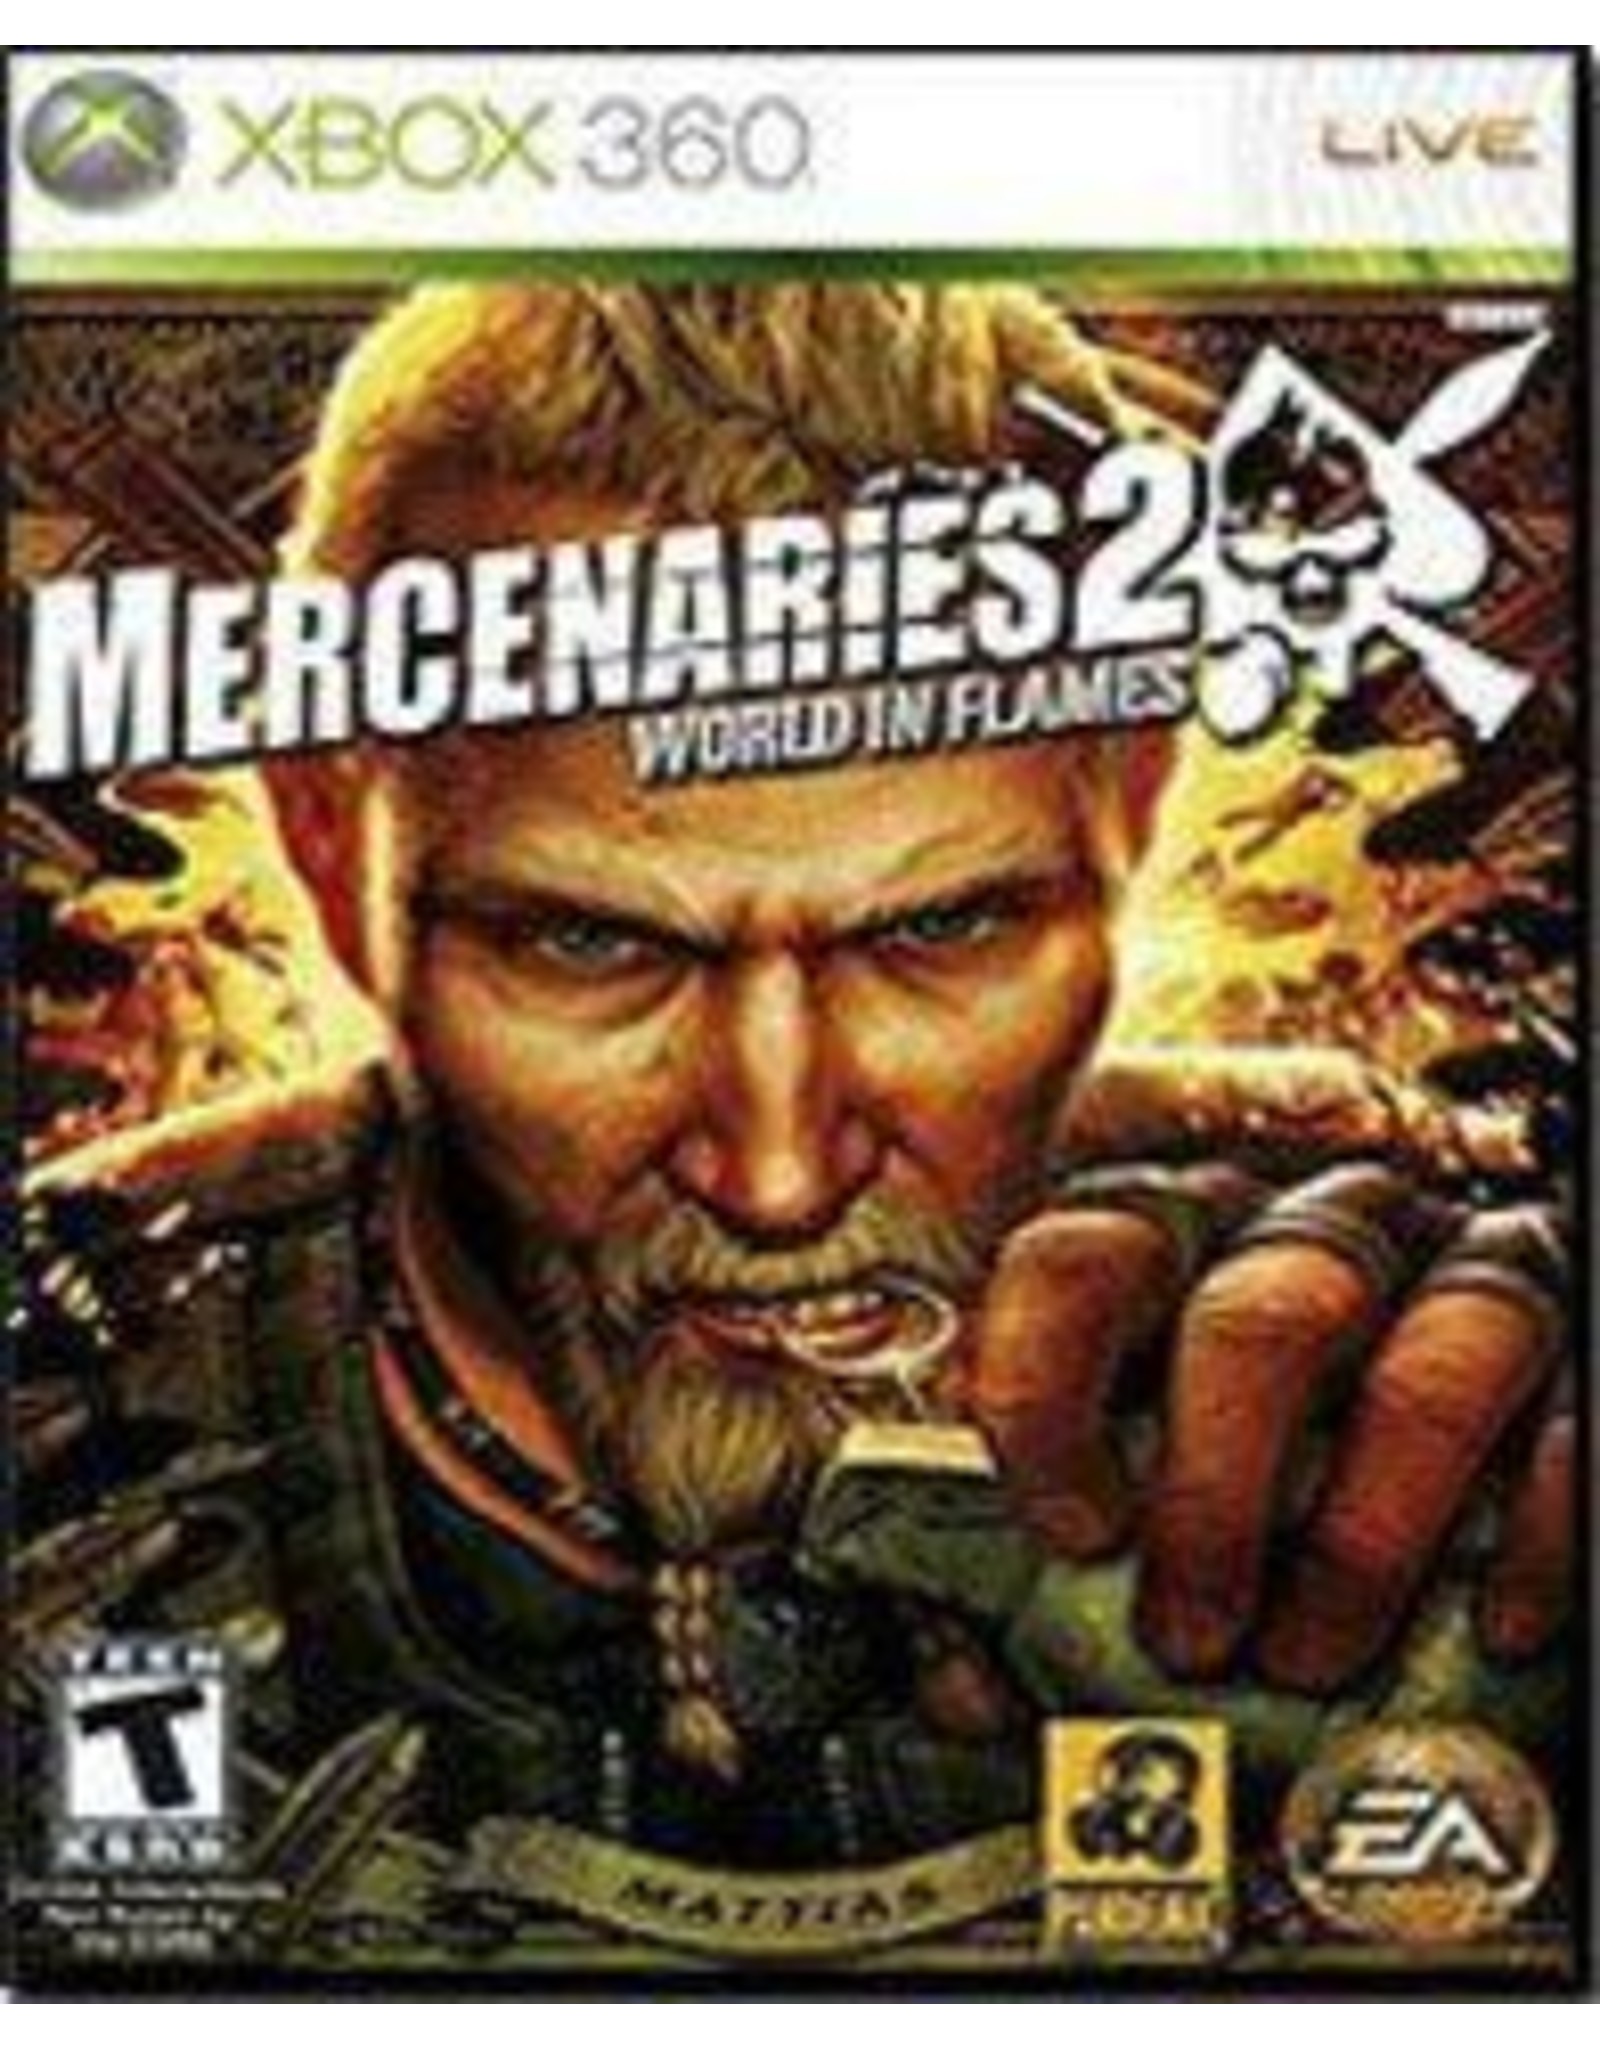 Xbox 360 Mercenaries 2 World in Flames (Used)